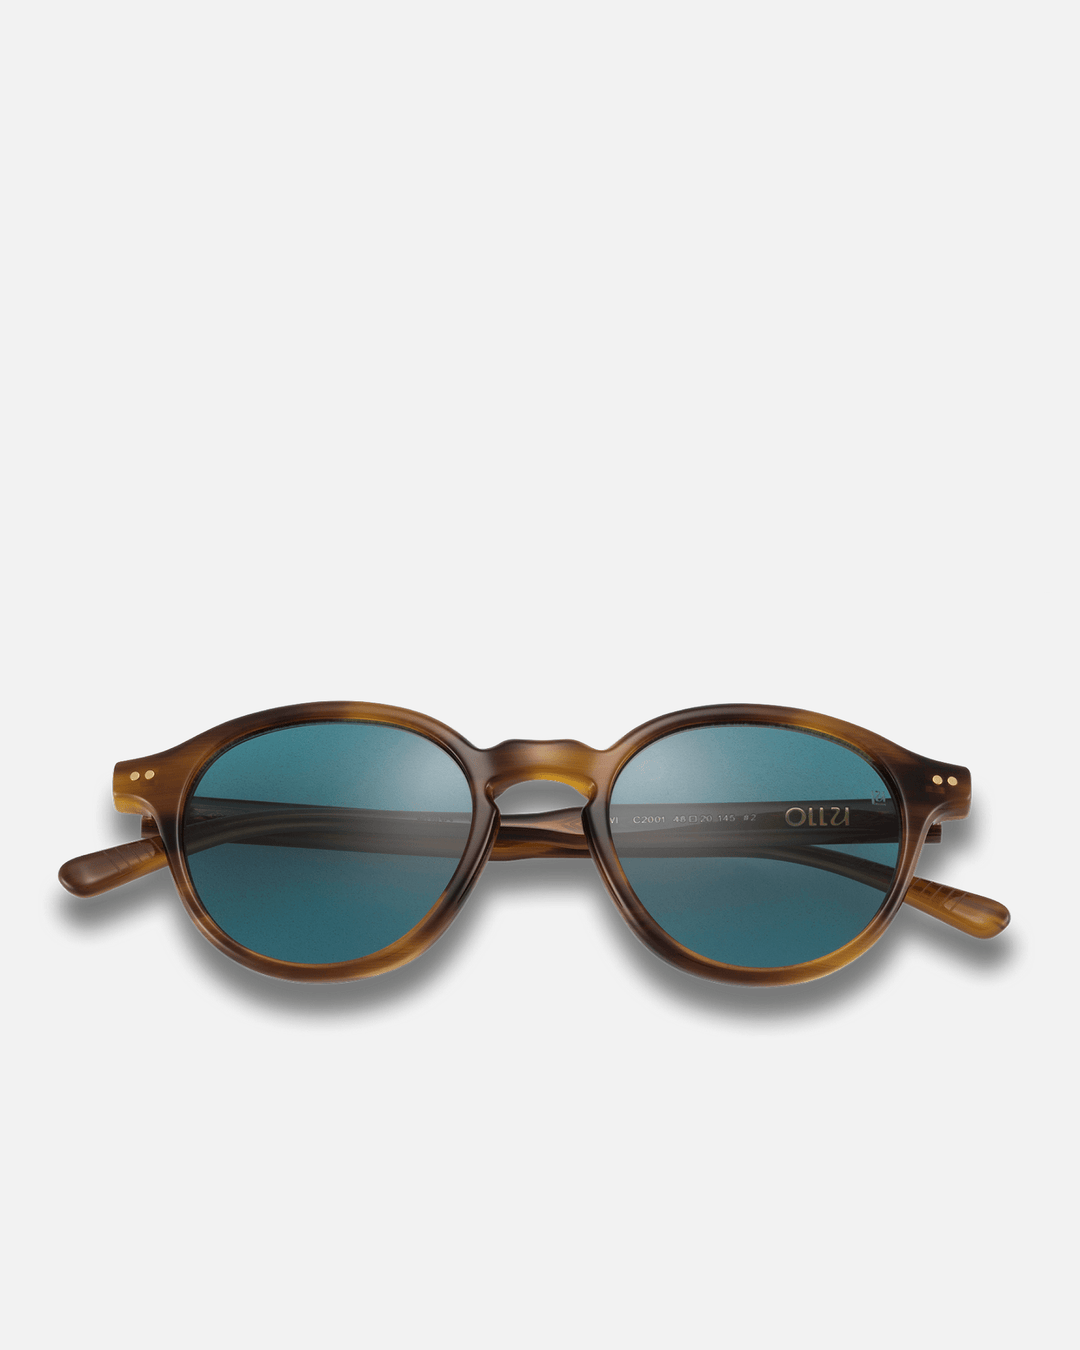 KIWI Bio-Acetate Round Frame Sunglasses for Men & Women | Earth (Blue Lens) | Sunnies Collection | OLLU